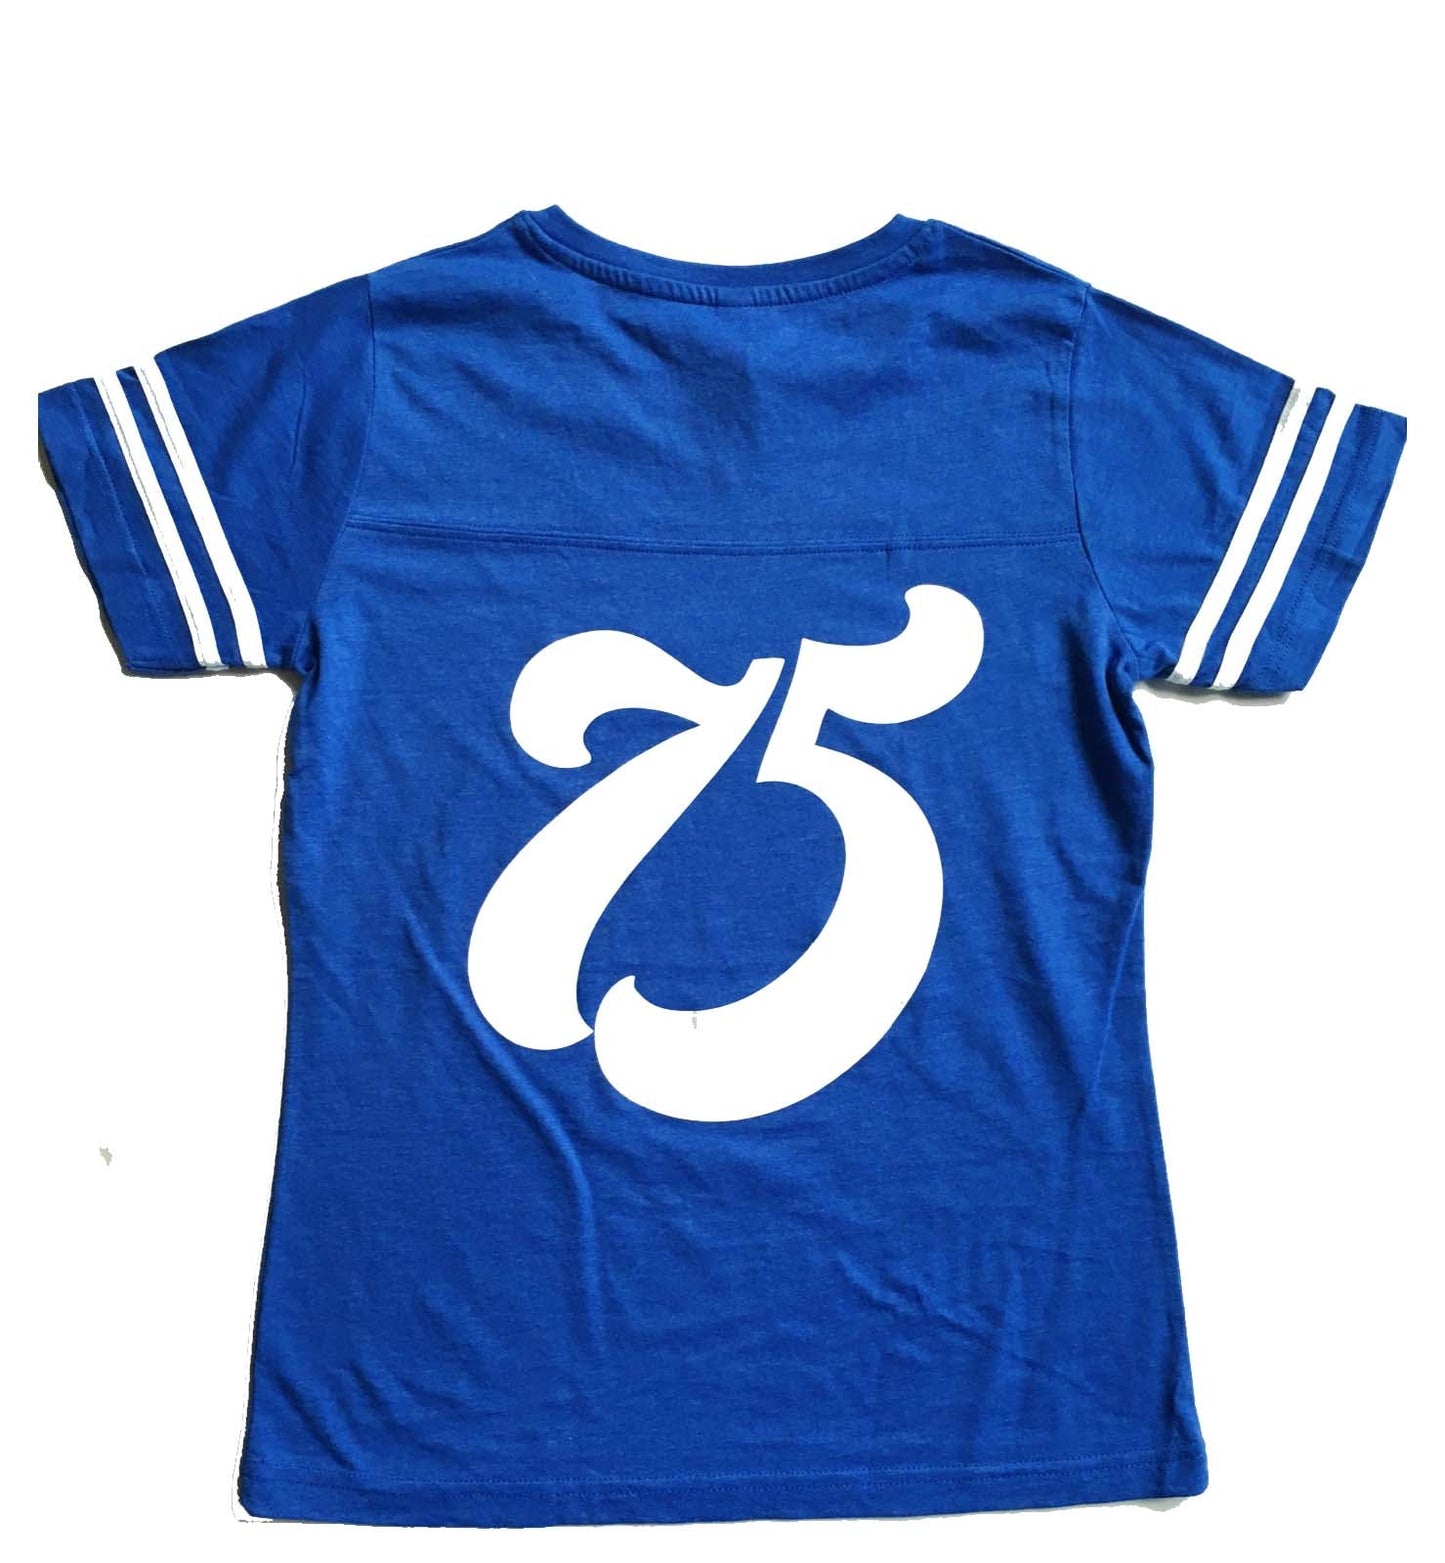 Blue Antone's '75 Jersey Shirt